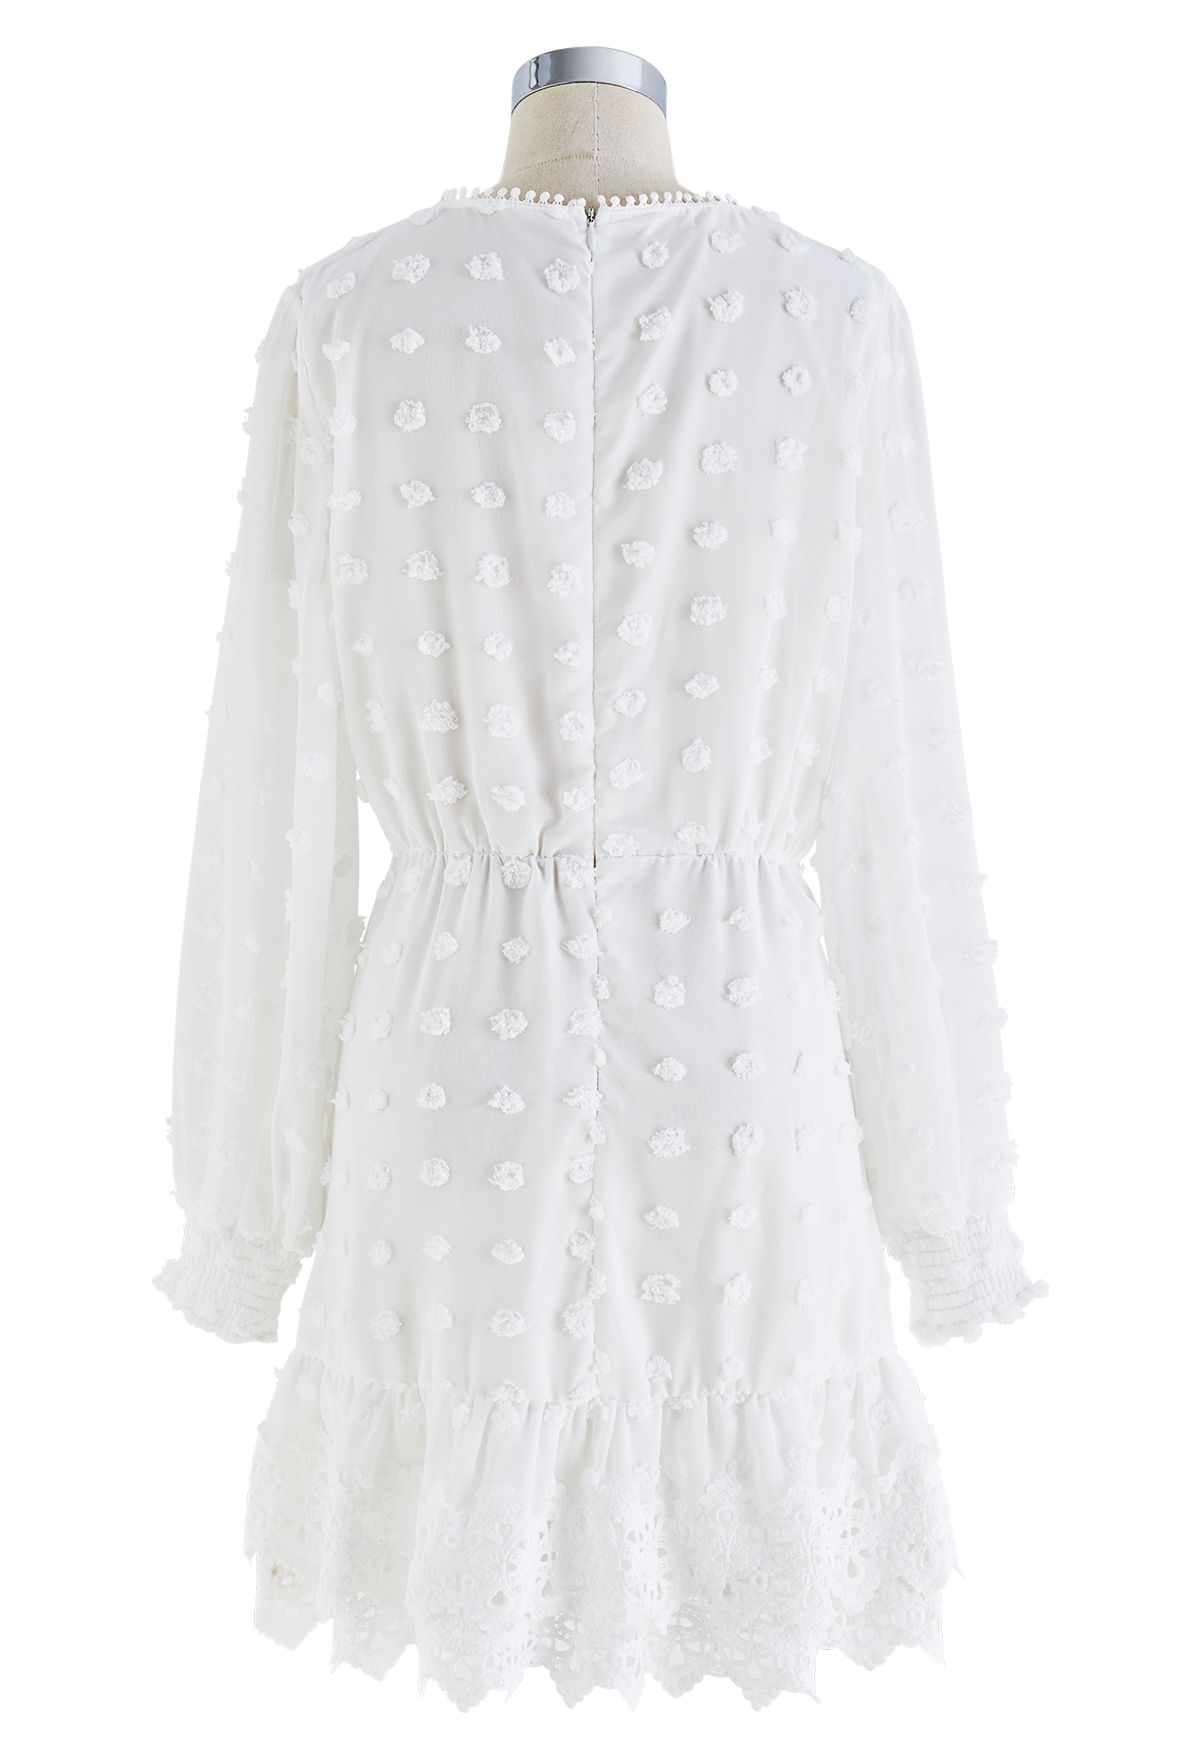 Cotton Candy Crochet Edge Sheer Midi Dress in White